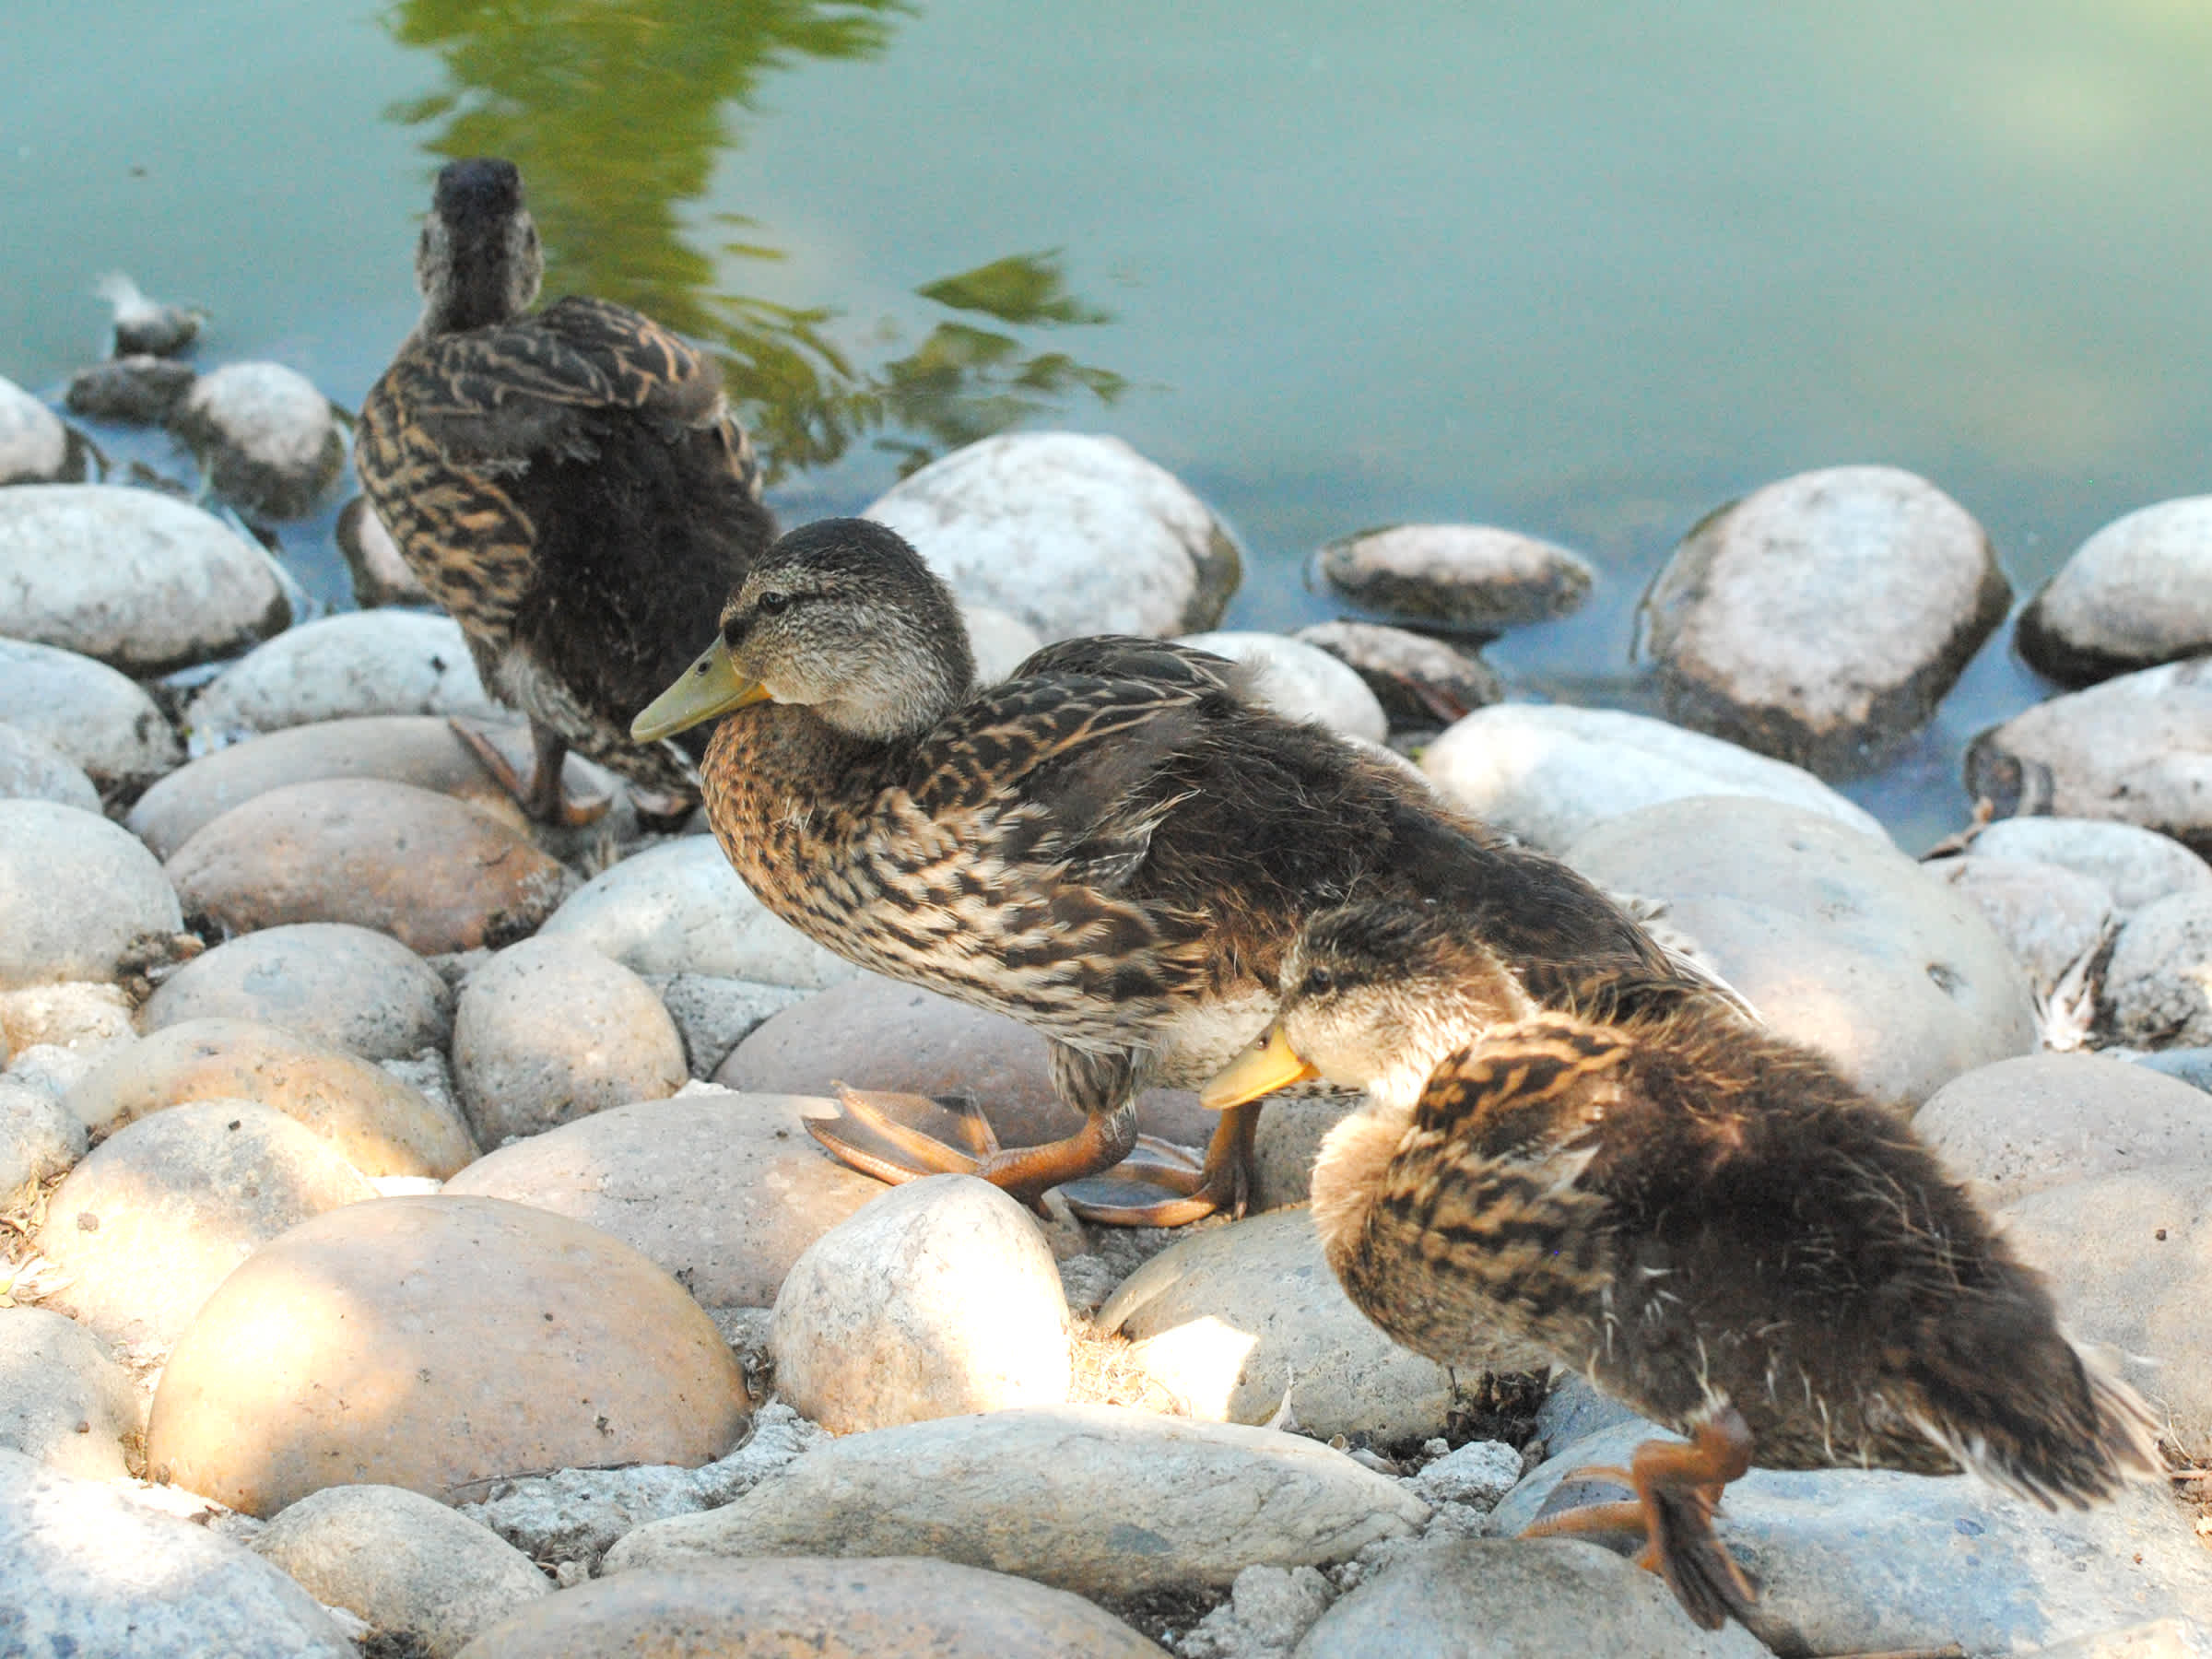 Three brown ducks walking on stones.